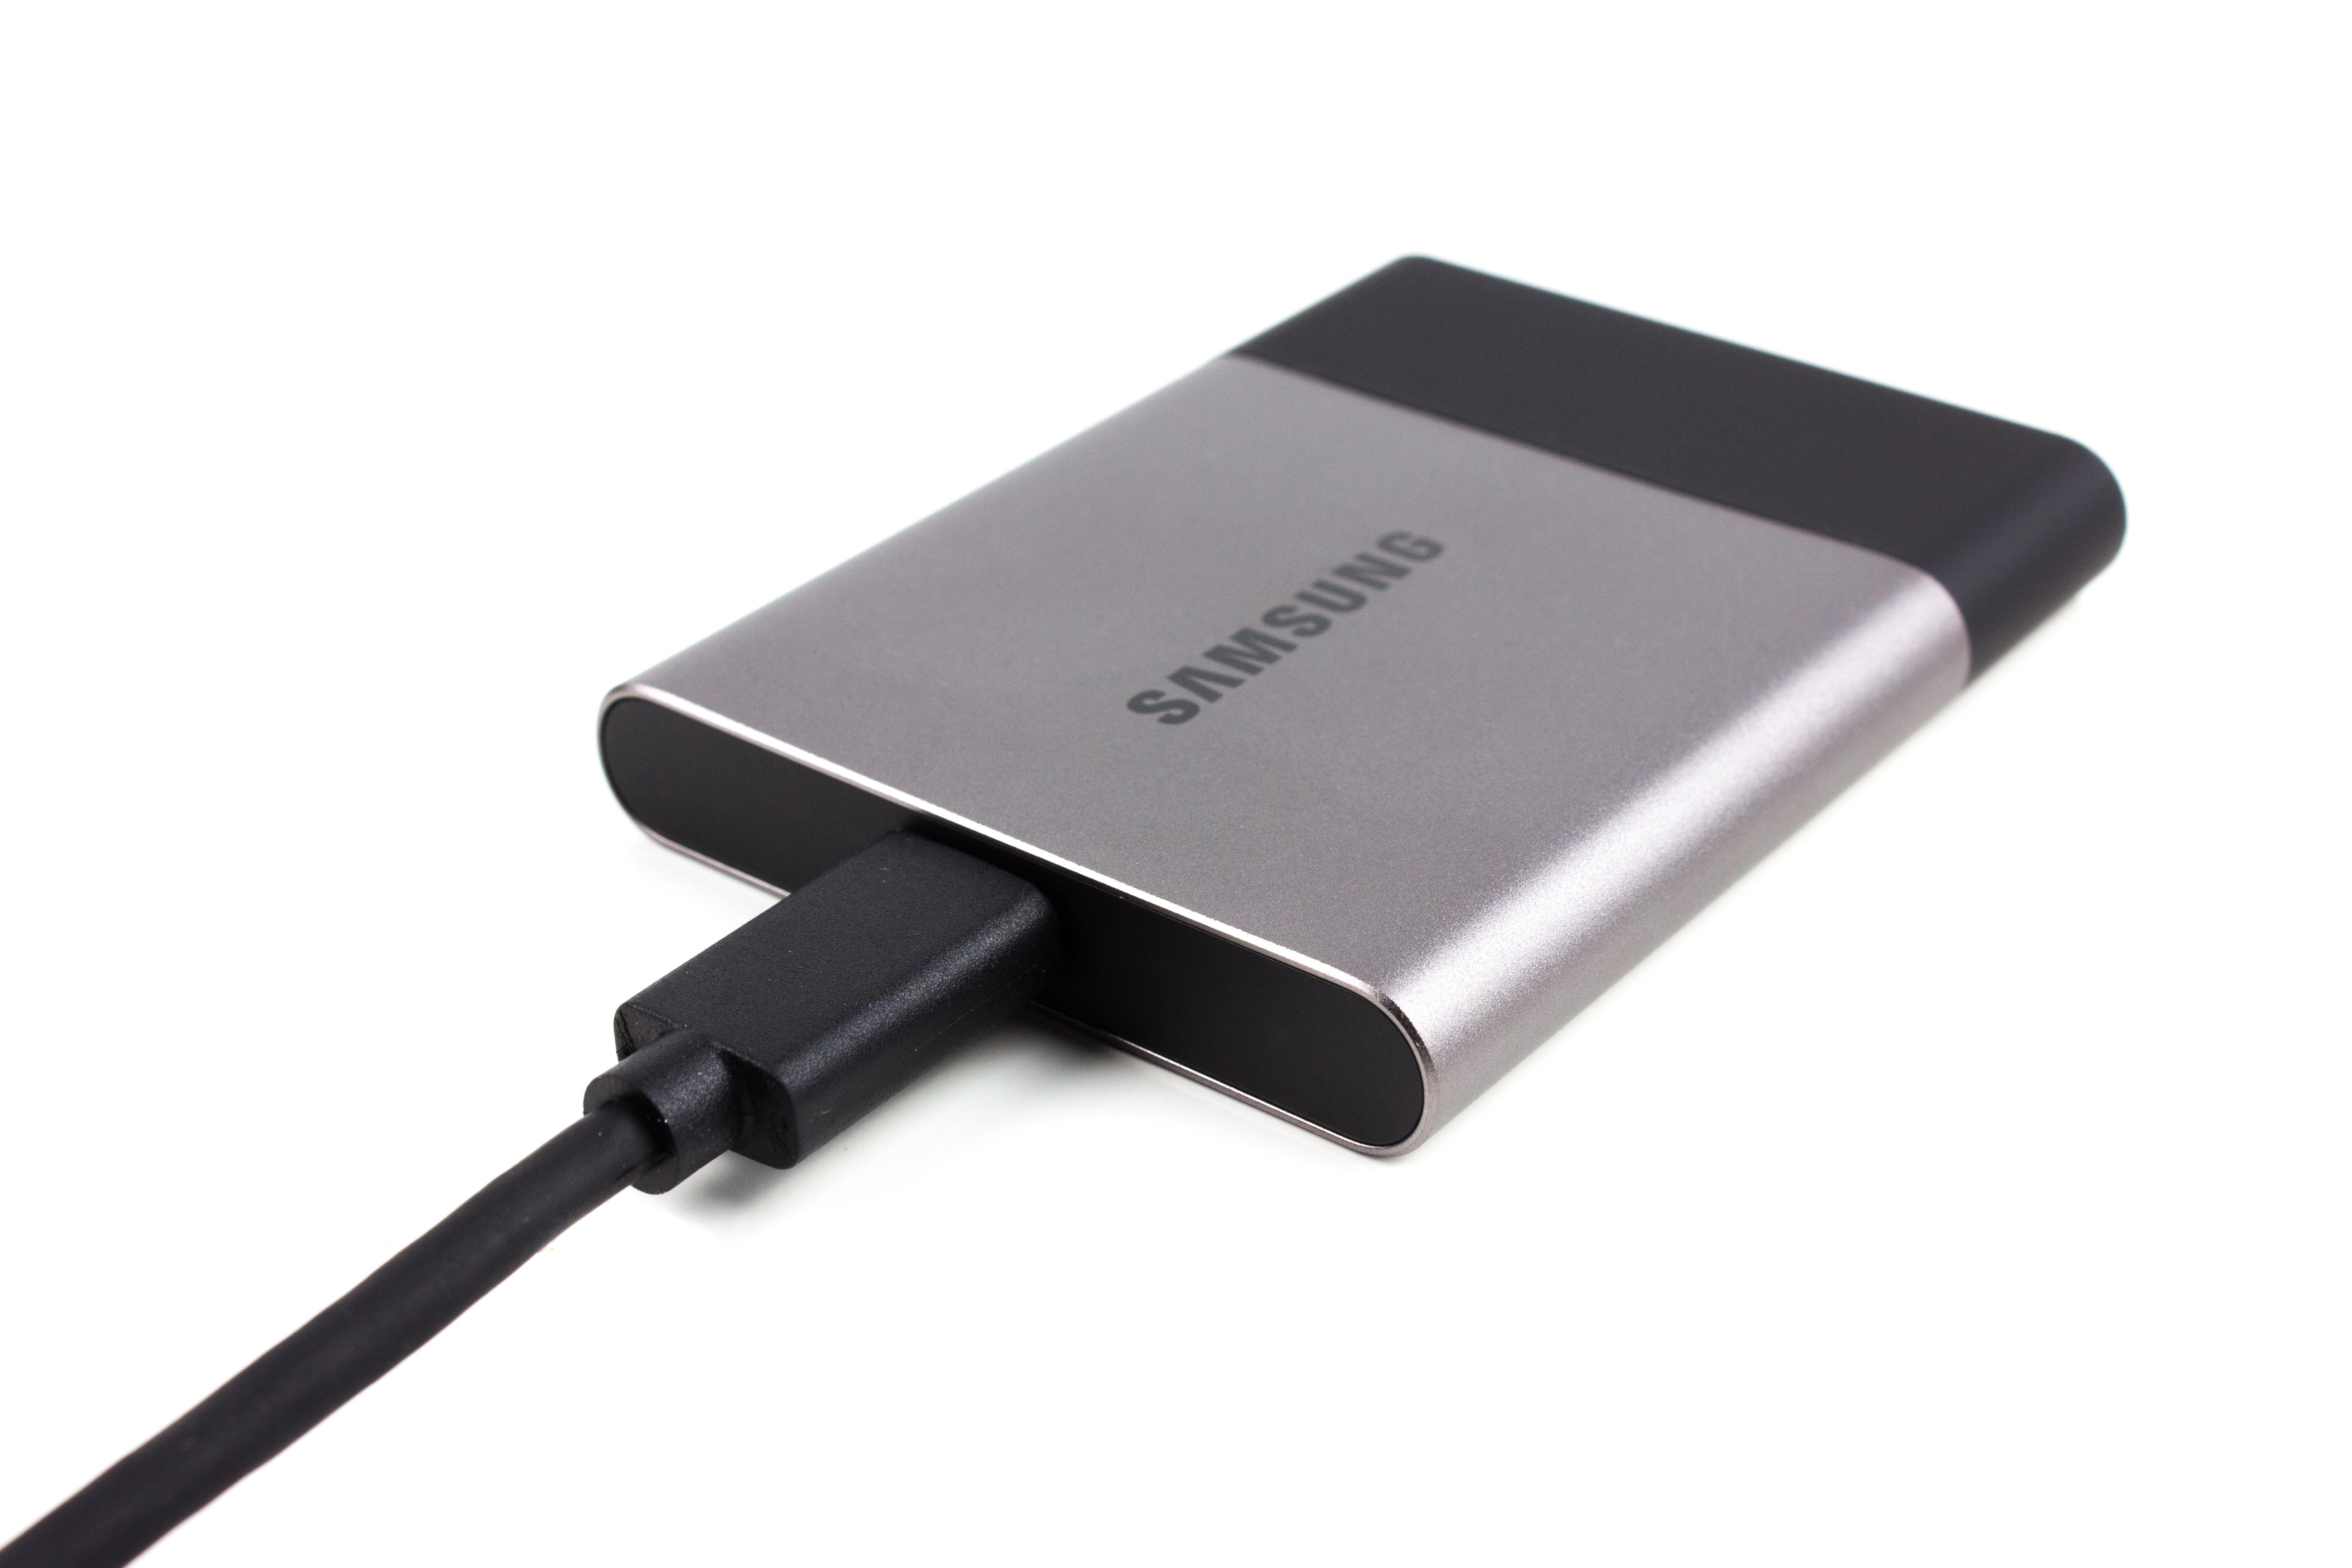 Samsung Portable SSD T3 - Lesertest Leo SSD mit Kabel